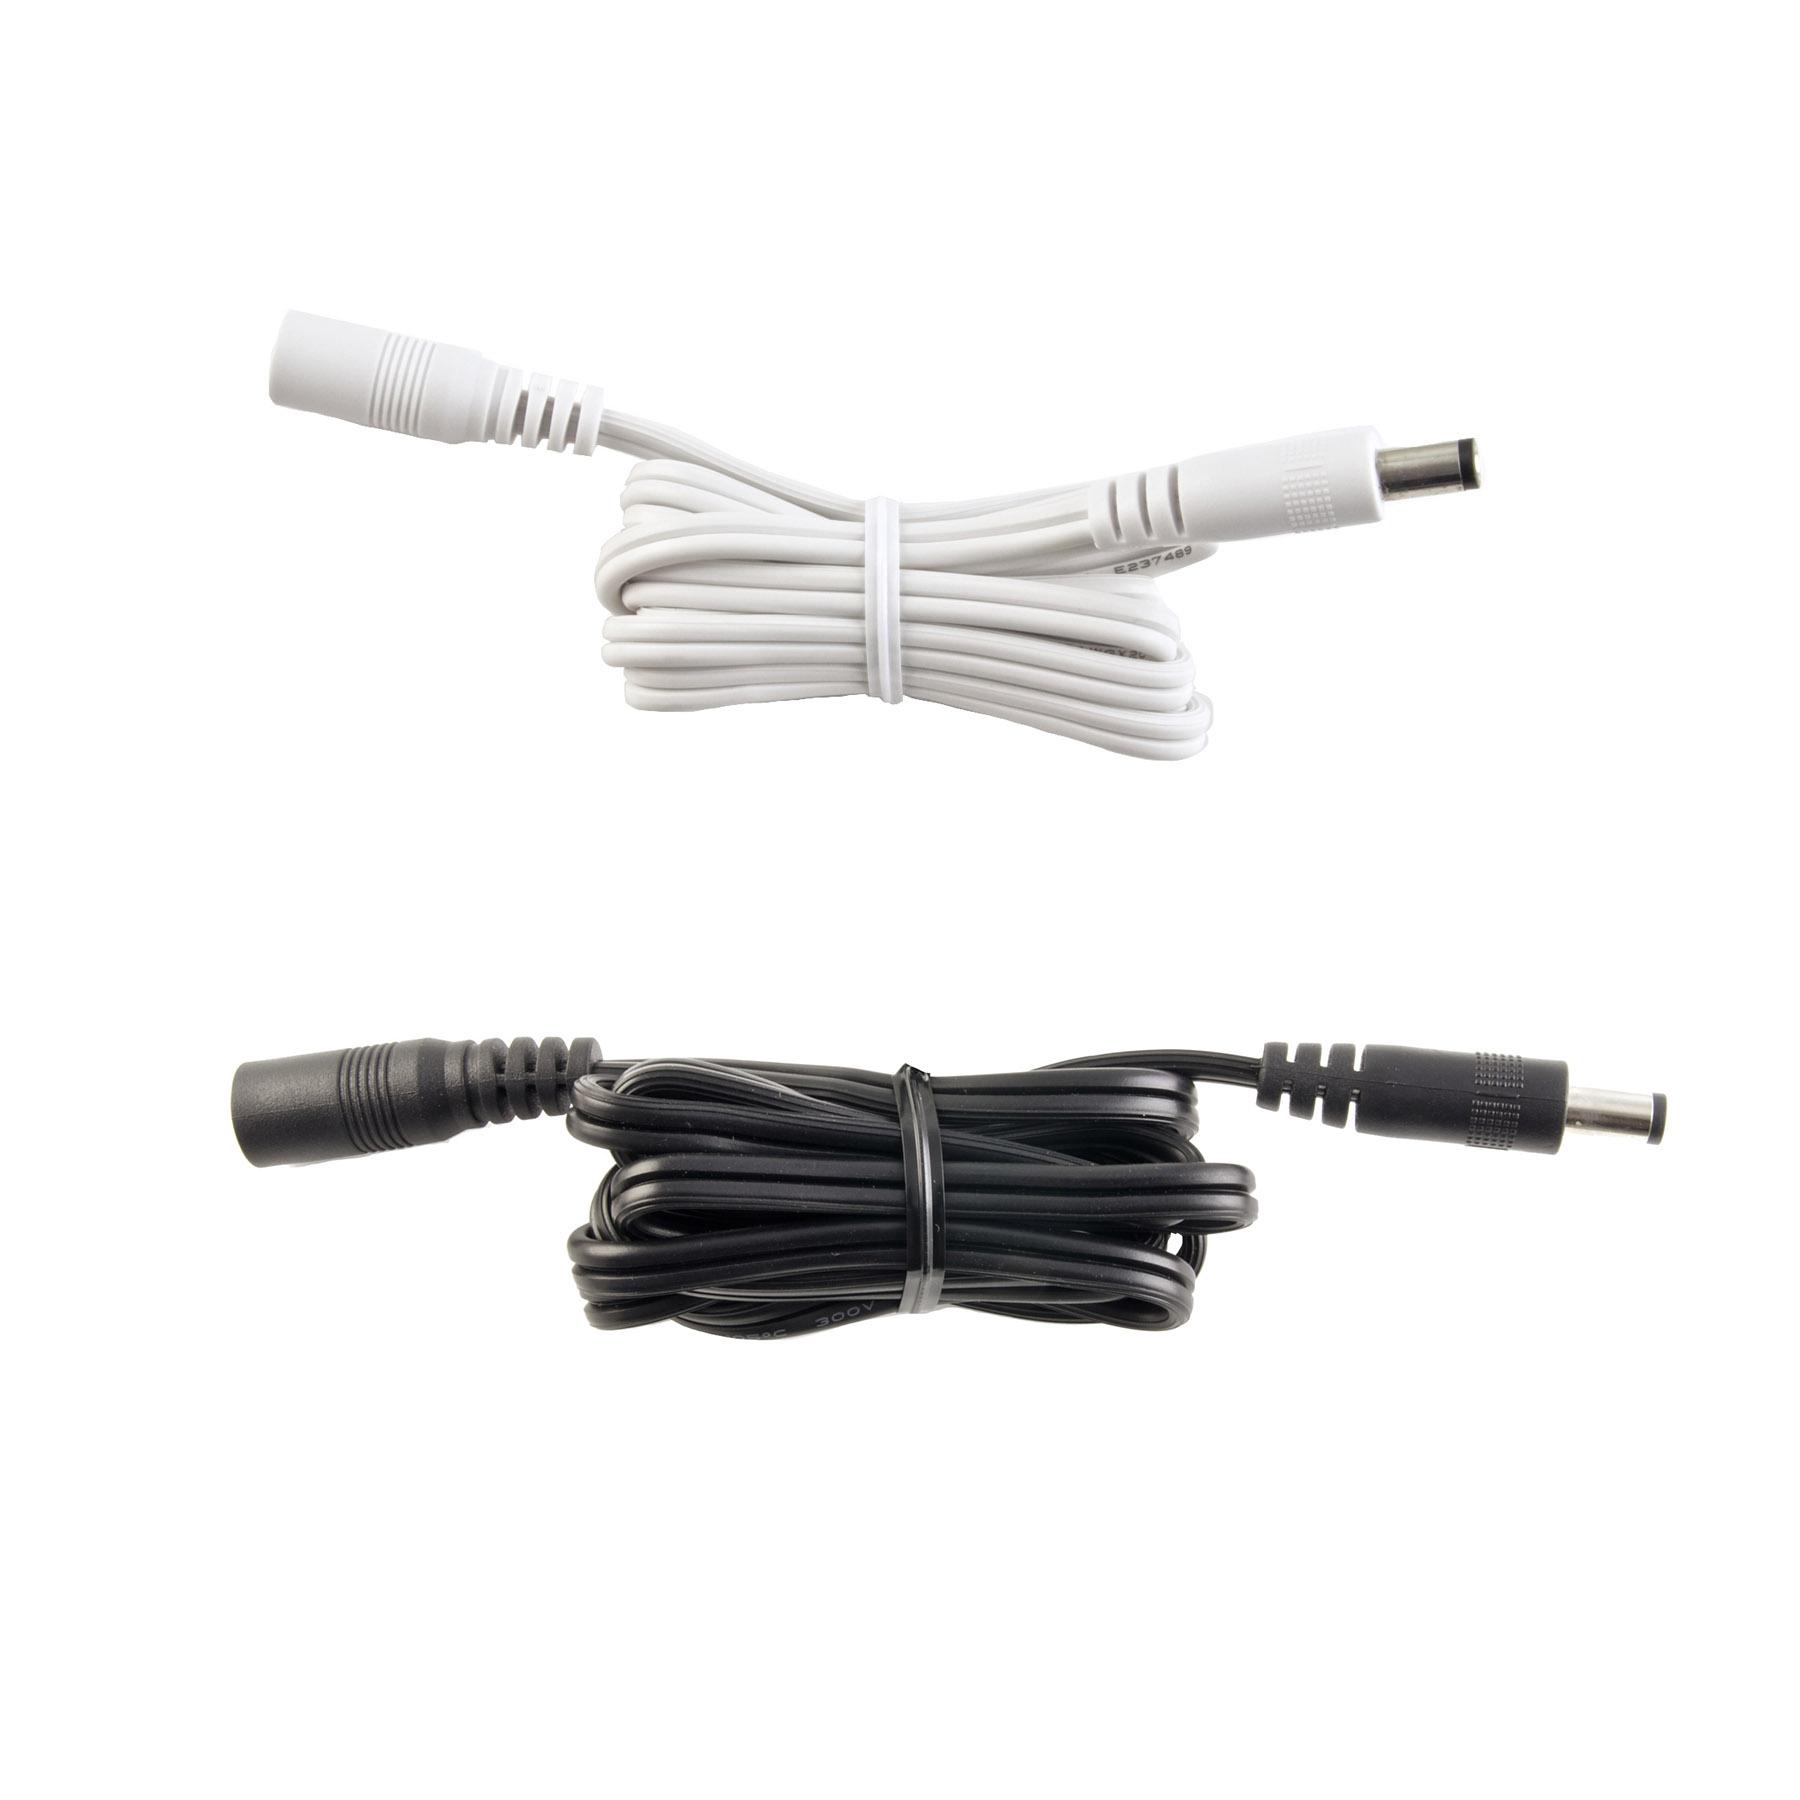 DC Plug Extension Cable